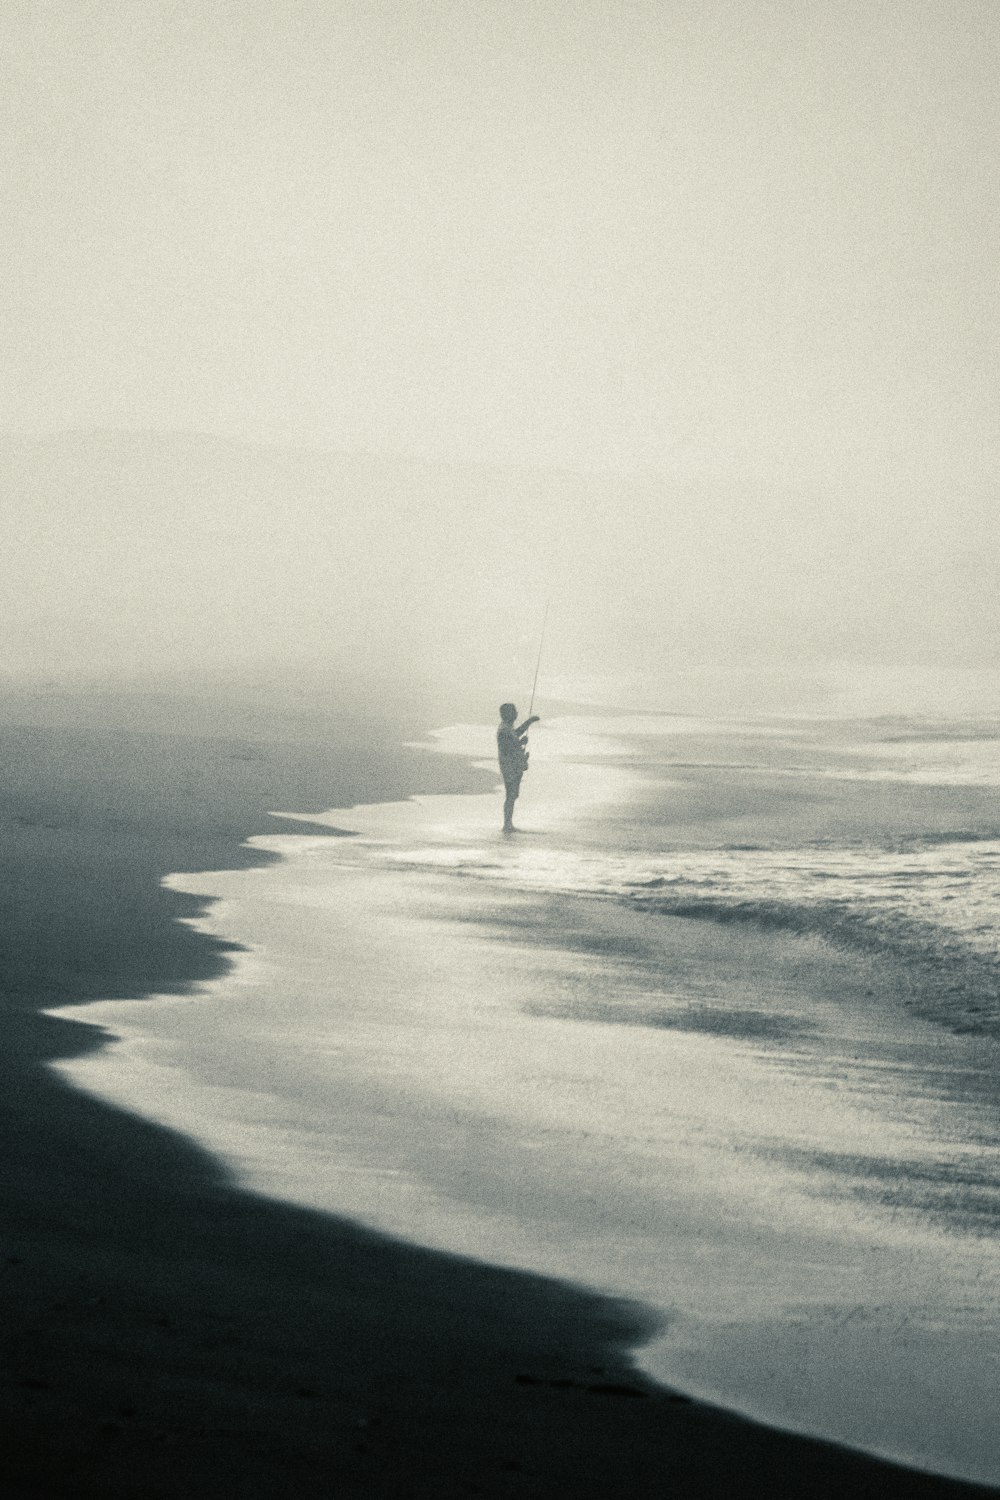 a person holding a kite on a beach